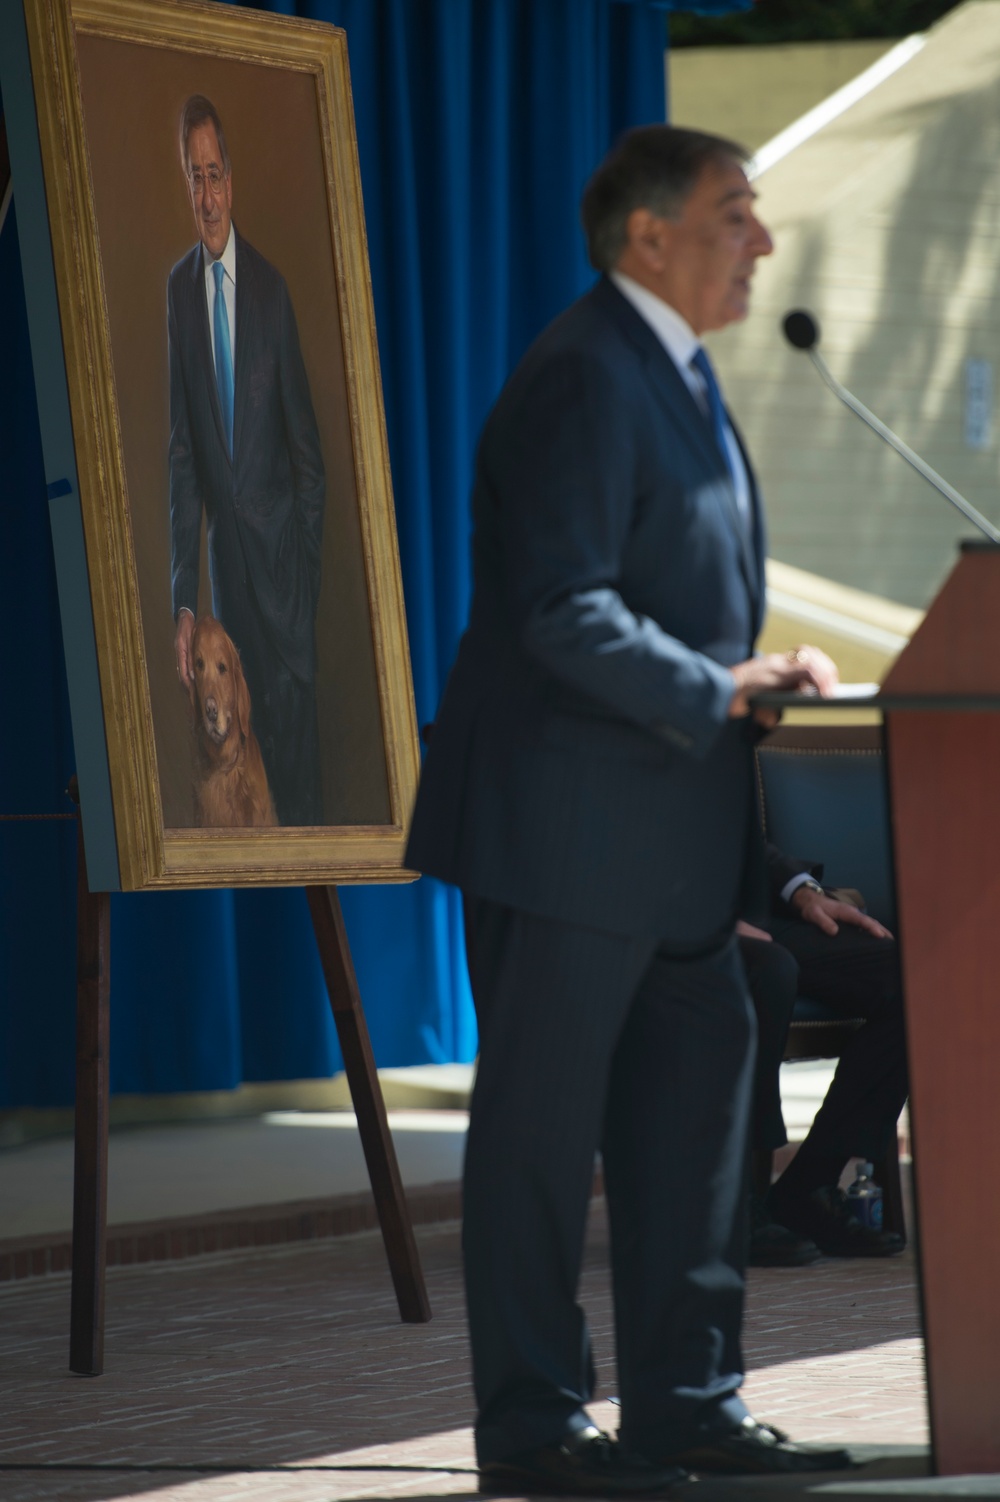 Portrait unveiling for former Secretary Panetta